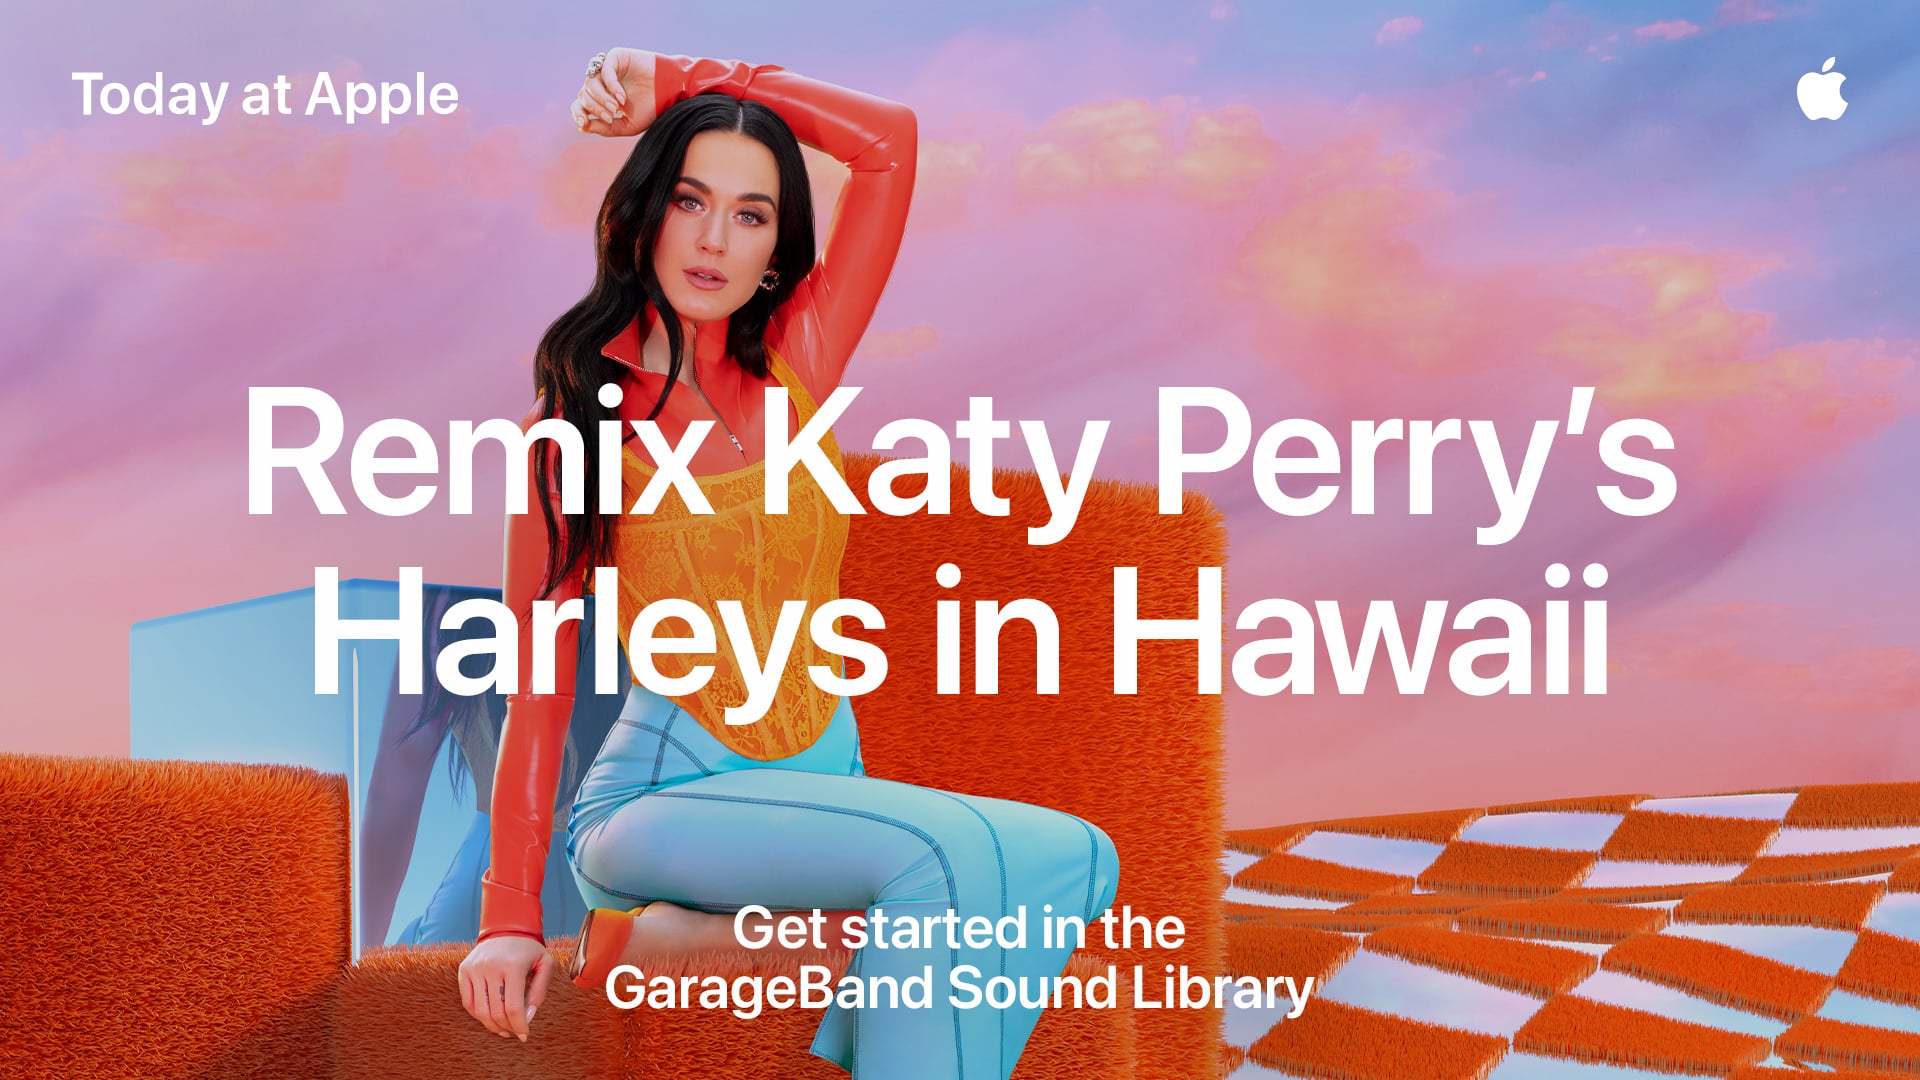 Apple Store ชวนคนรักดนตรี มารีมิกซ์เพลงใหม่ของ Katy Perry